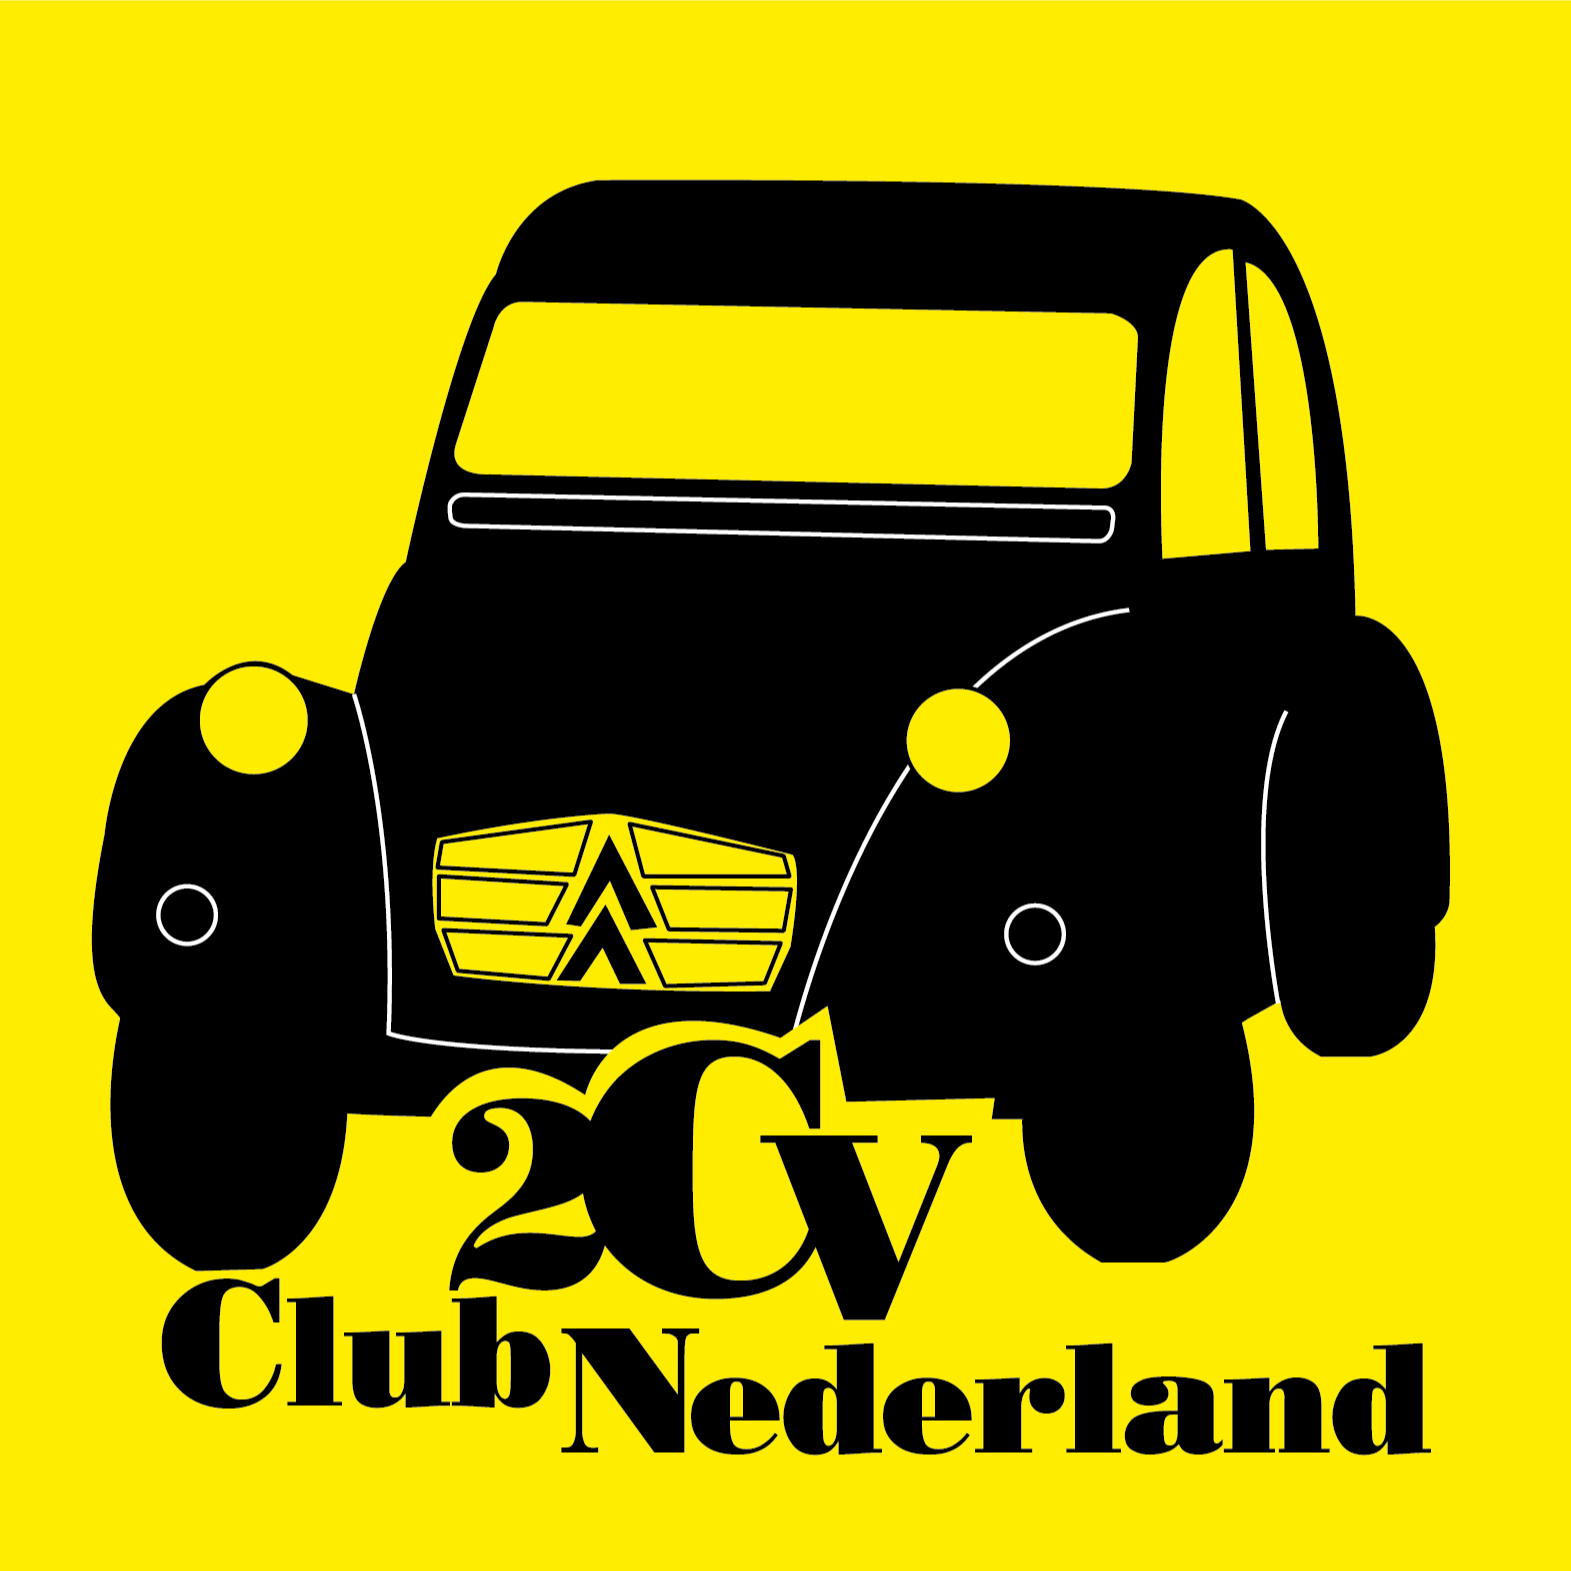 2CV Club Nederland